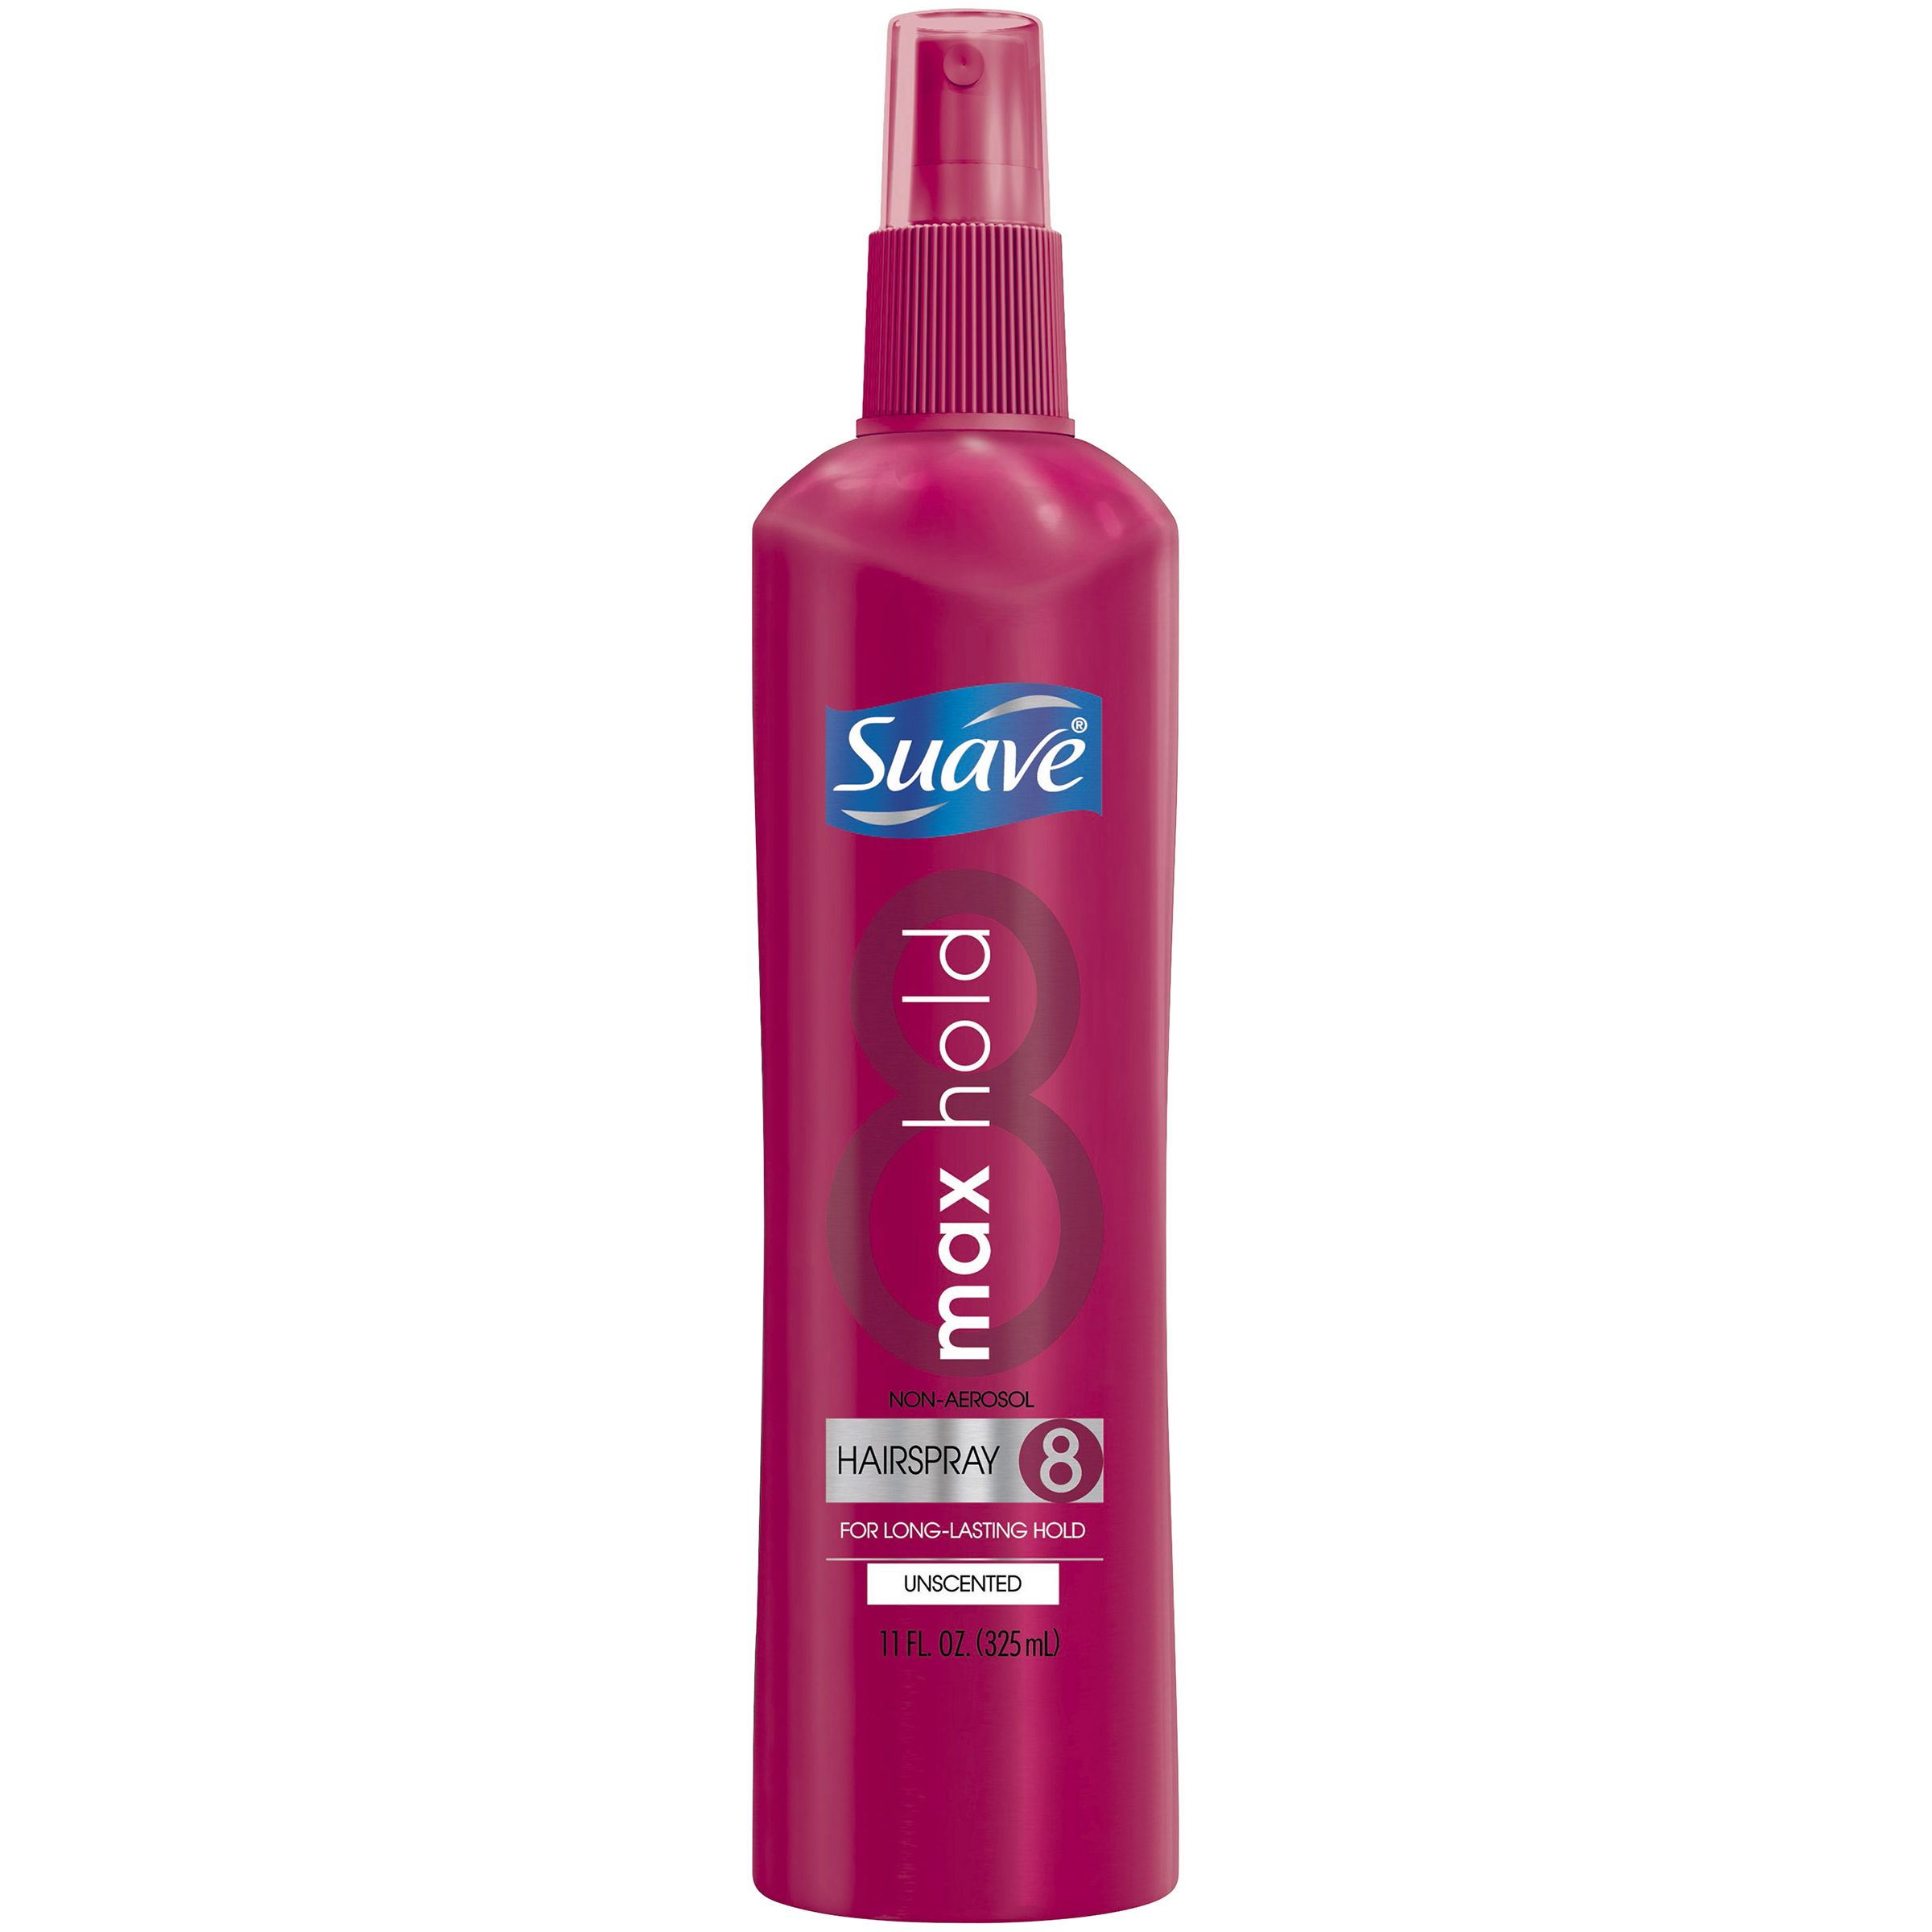 Suave Hairspray, Unscented, Non Aerosol, Max Hold 8, 11 fl oz (325 ml)